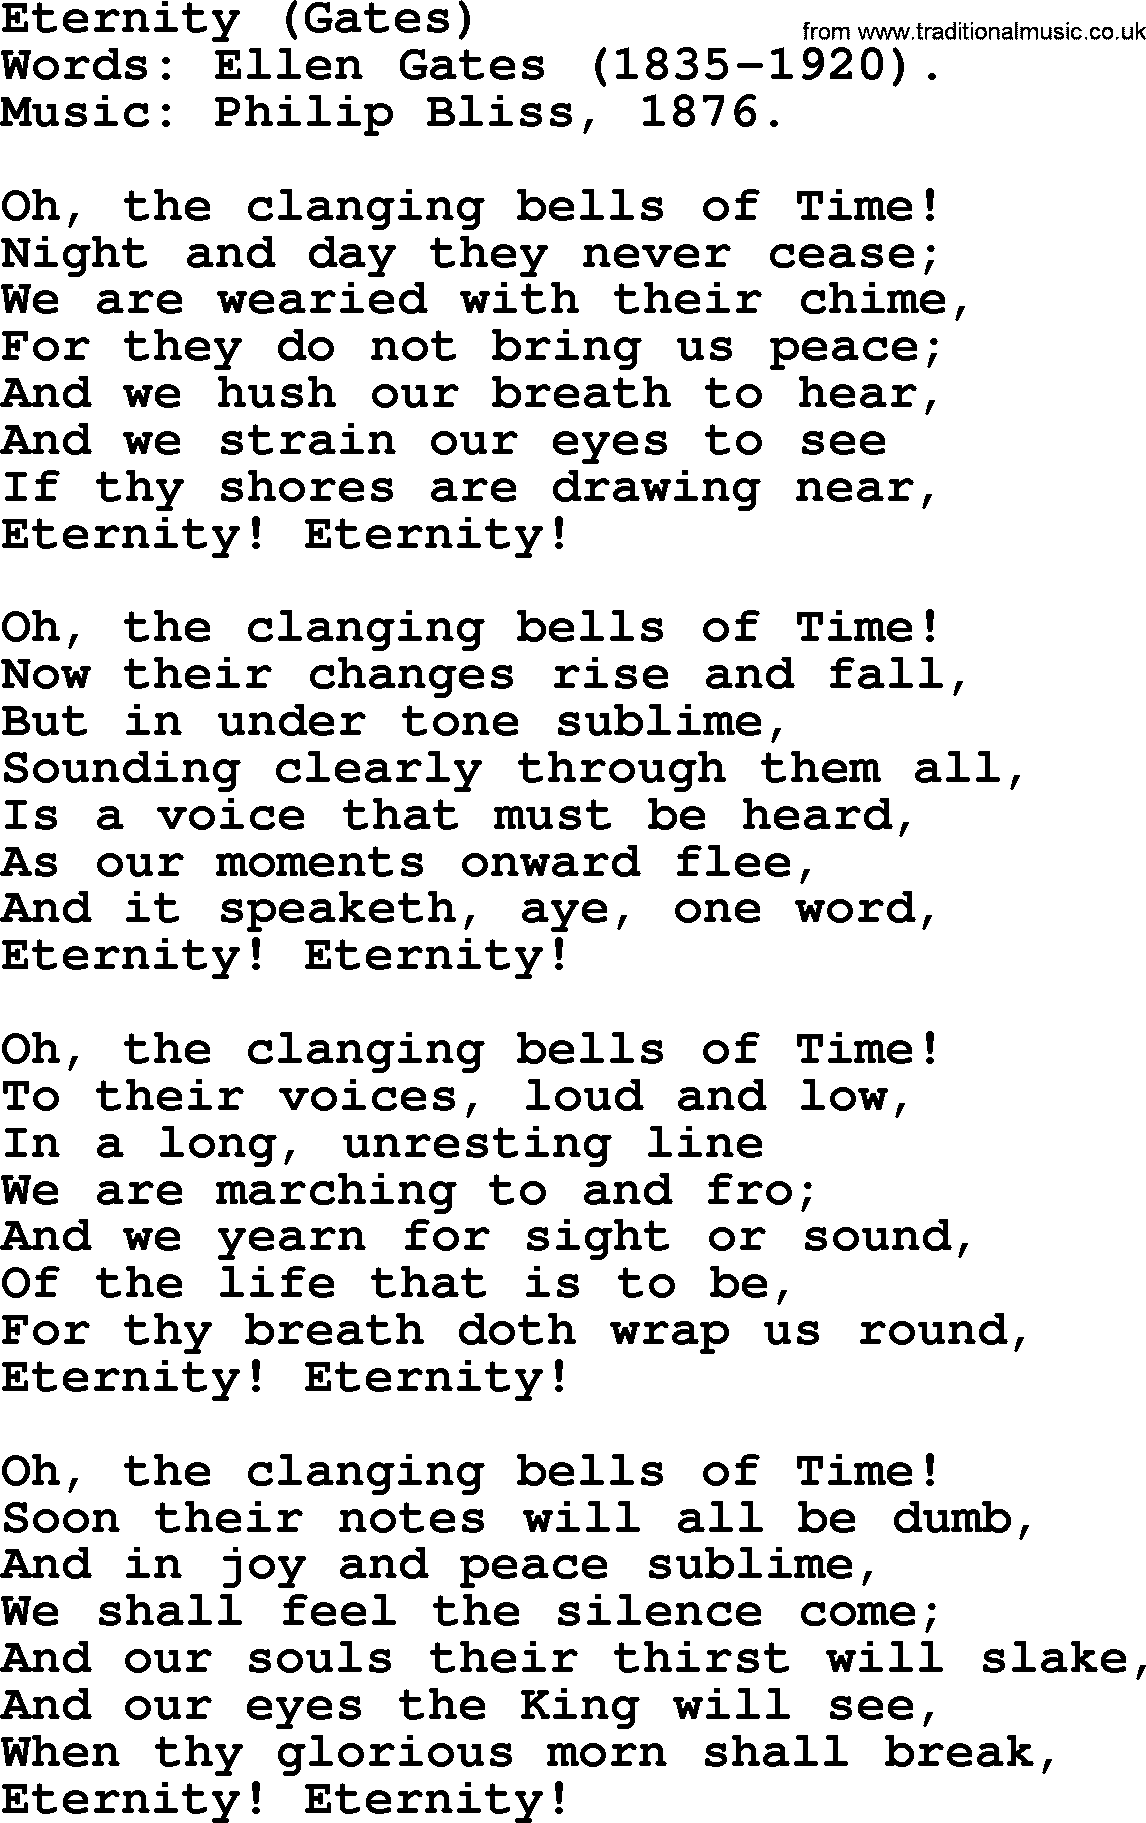 Philip Bliss Song: Eternity, lyrics